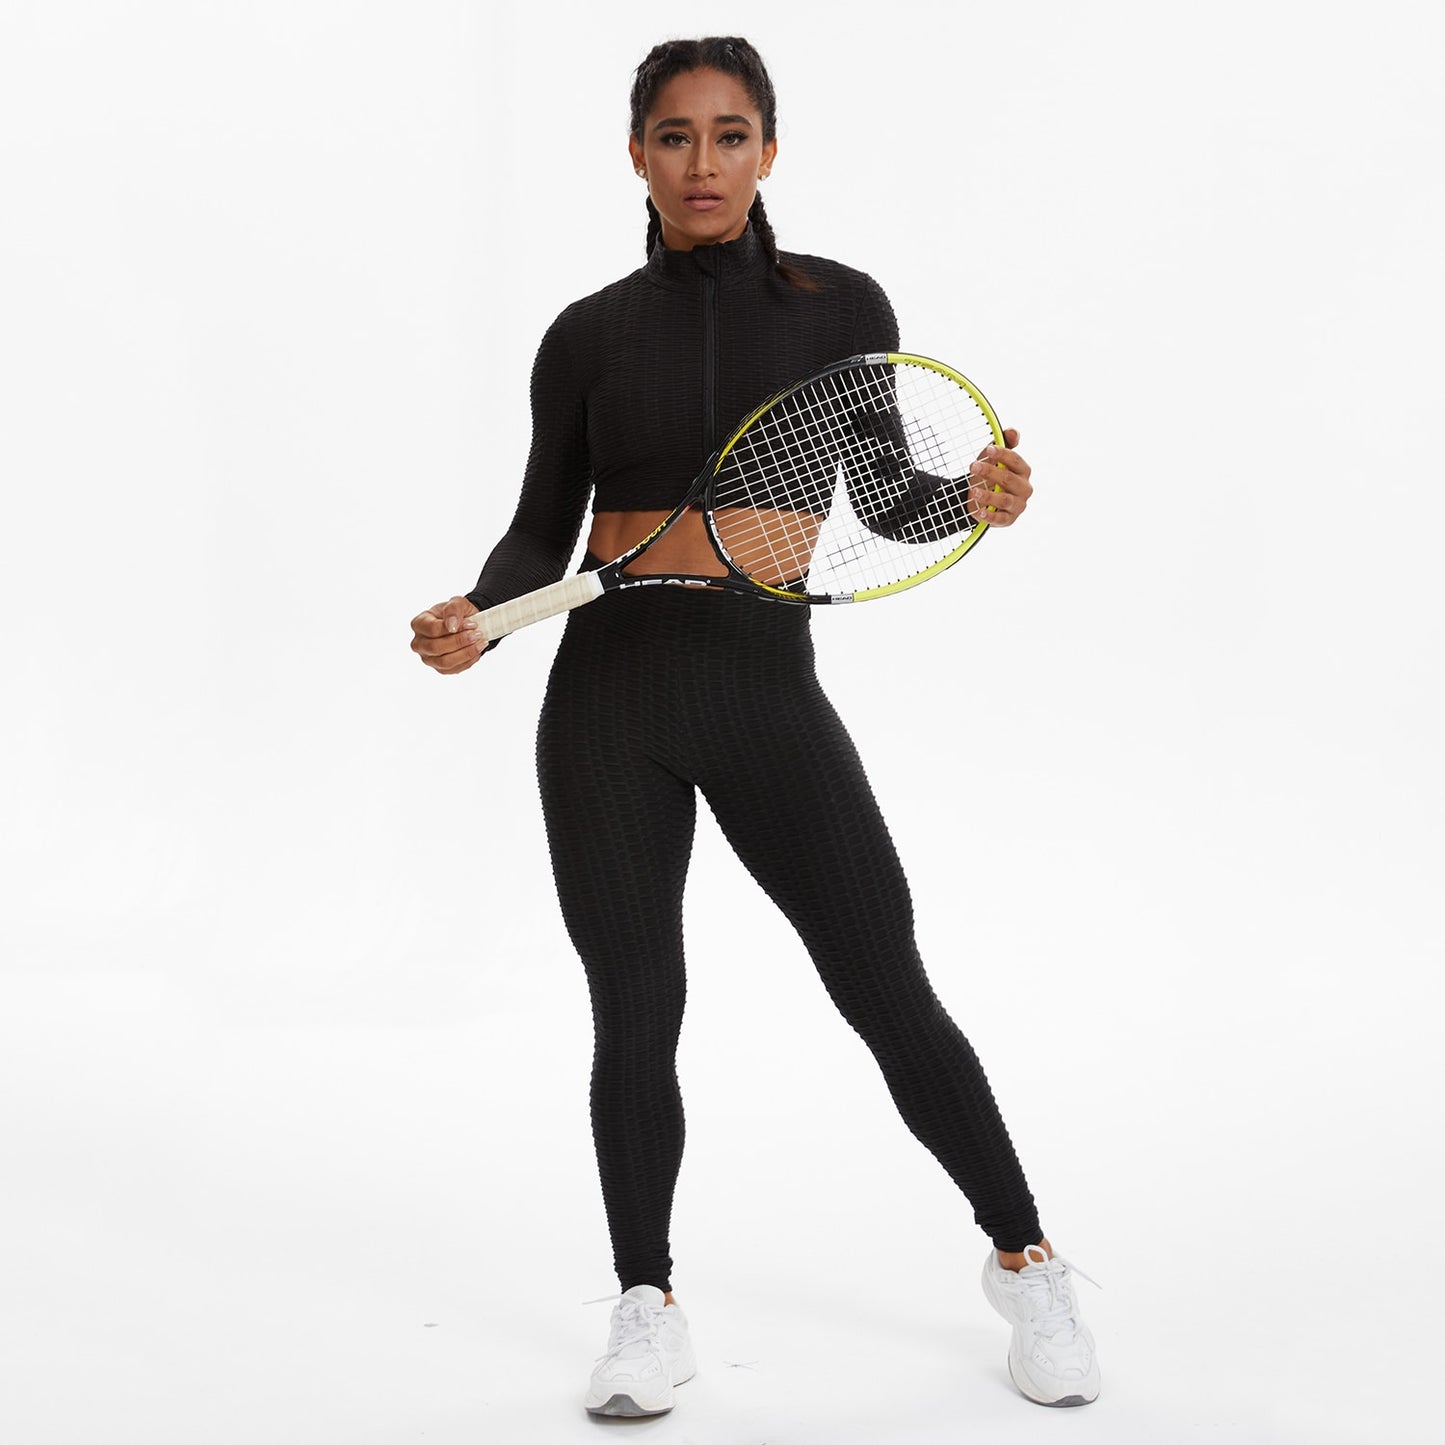 NEW Print Women Yoga Fitness Sportswear Set